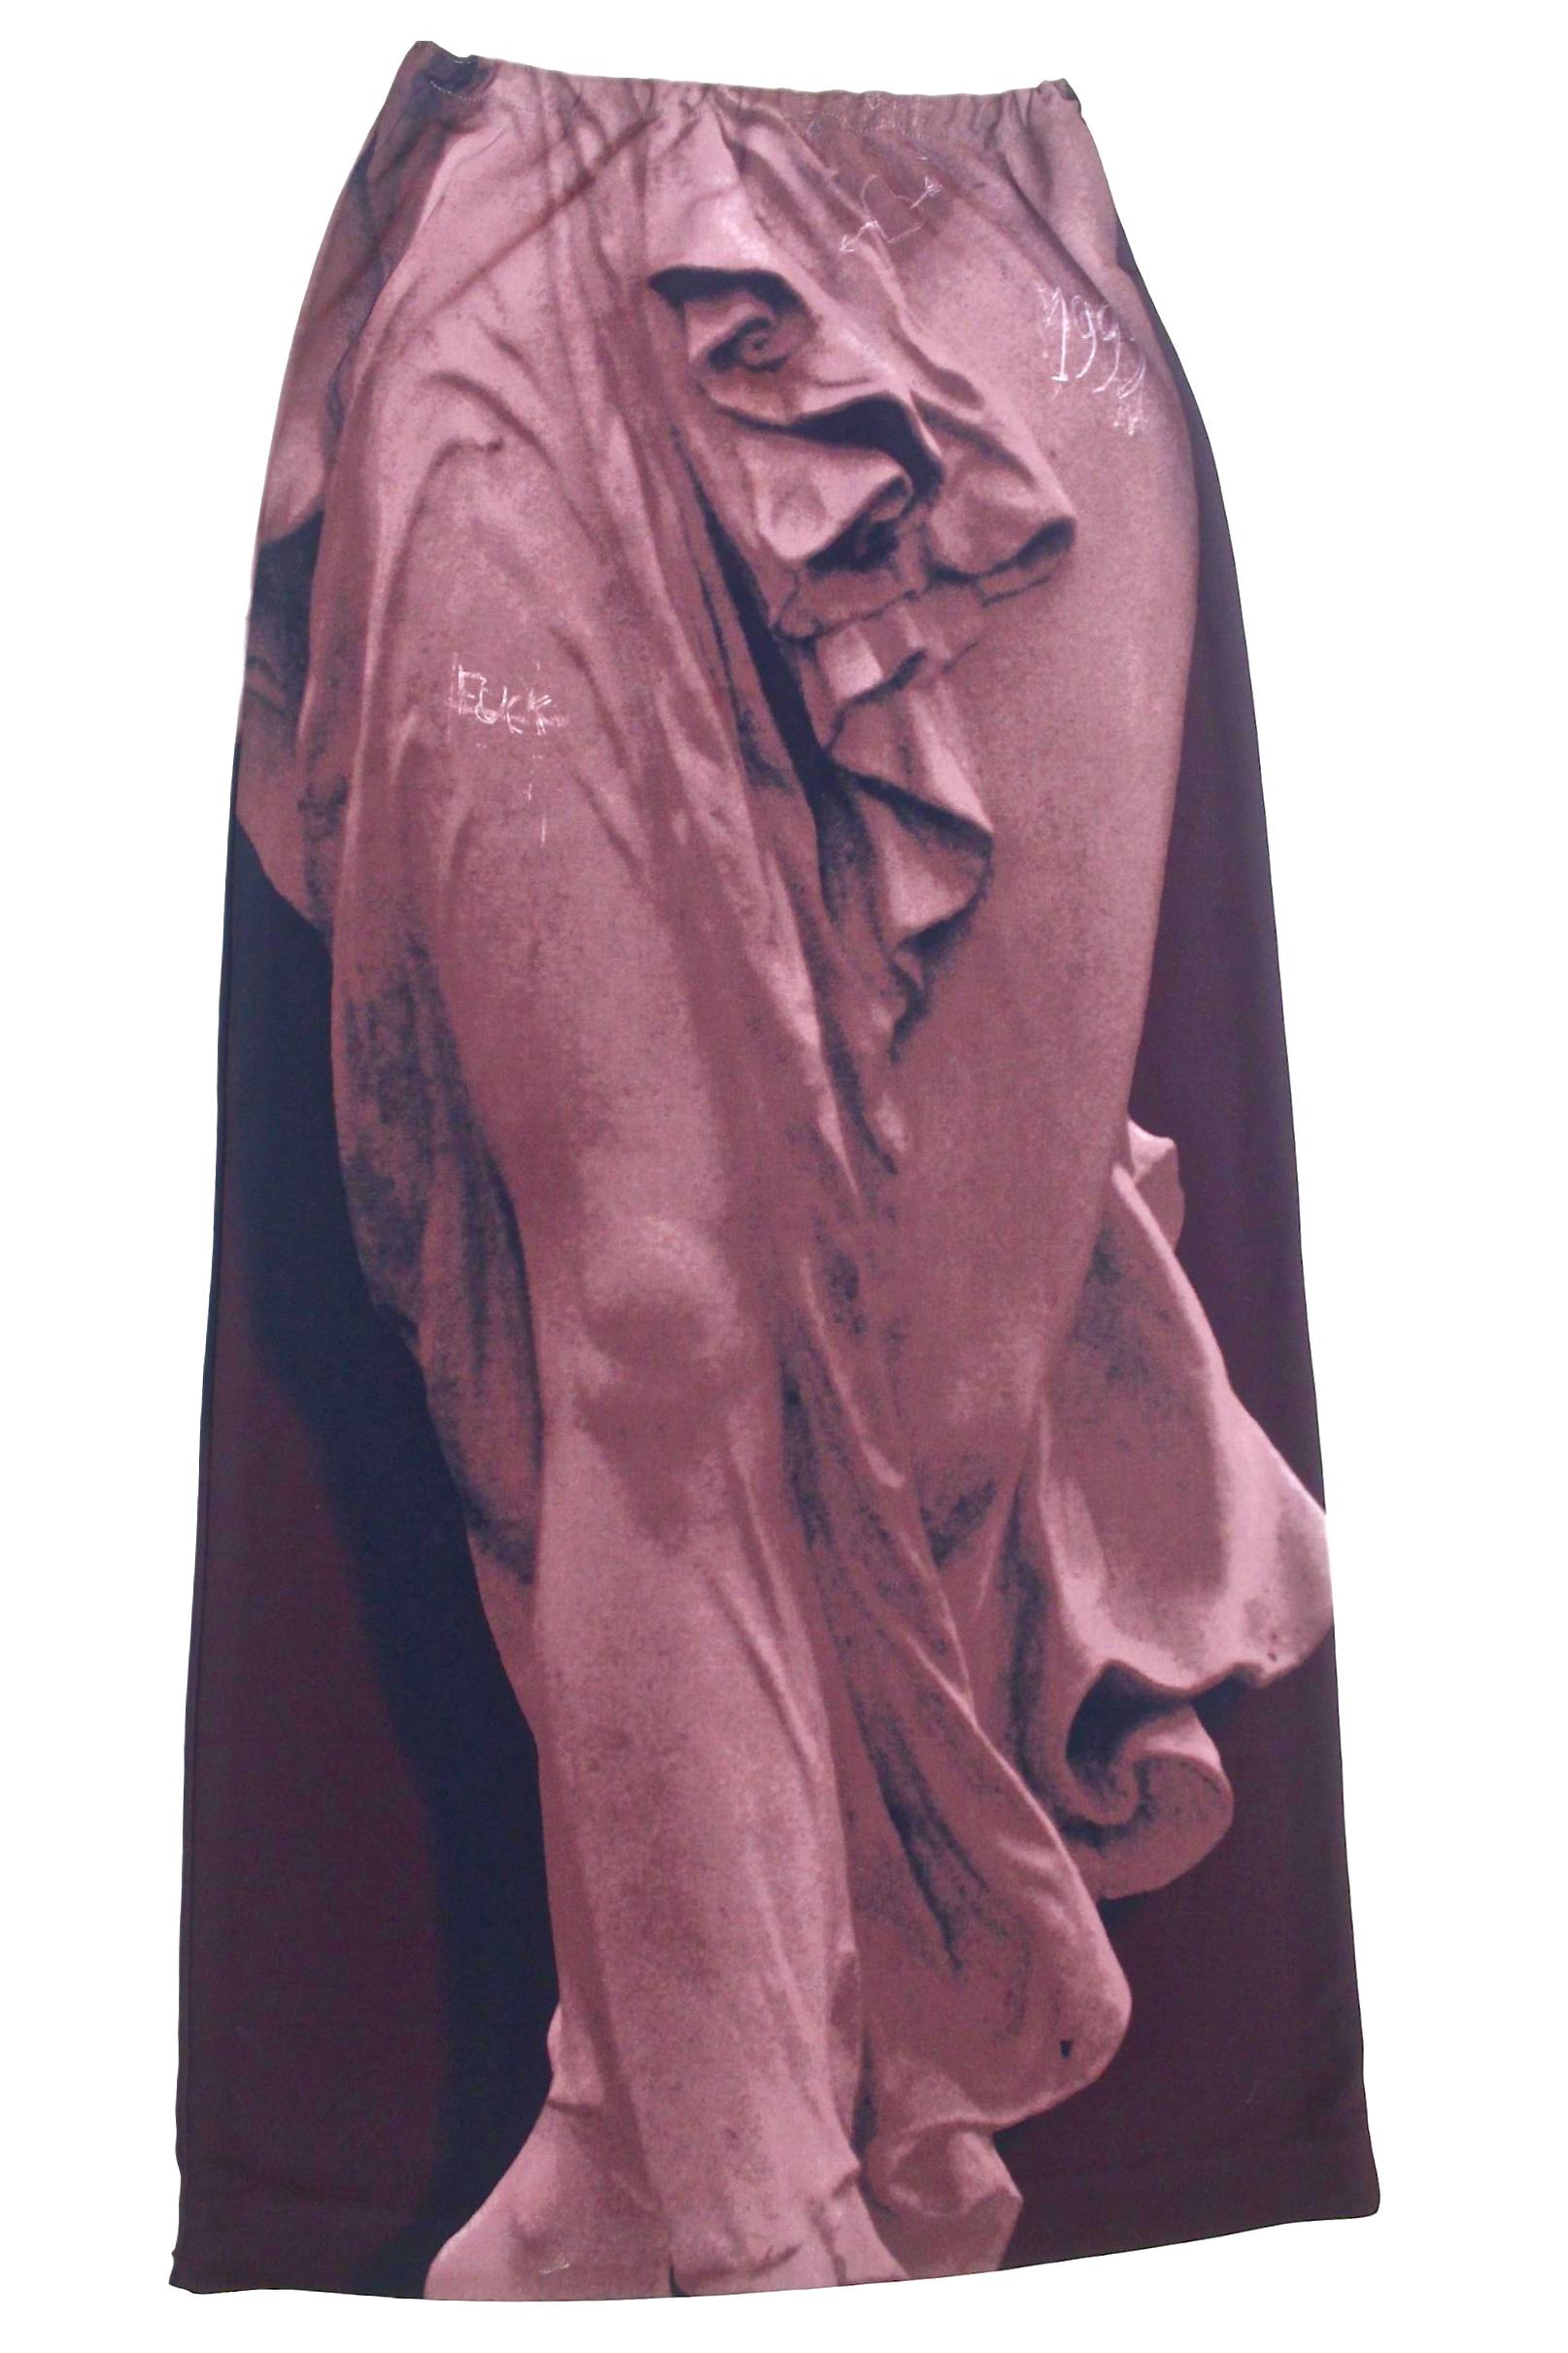 Jean Paul Gaultier 1998/9 Trompe l'oeil Goddess Graffiti Outfit 7